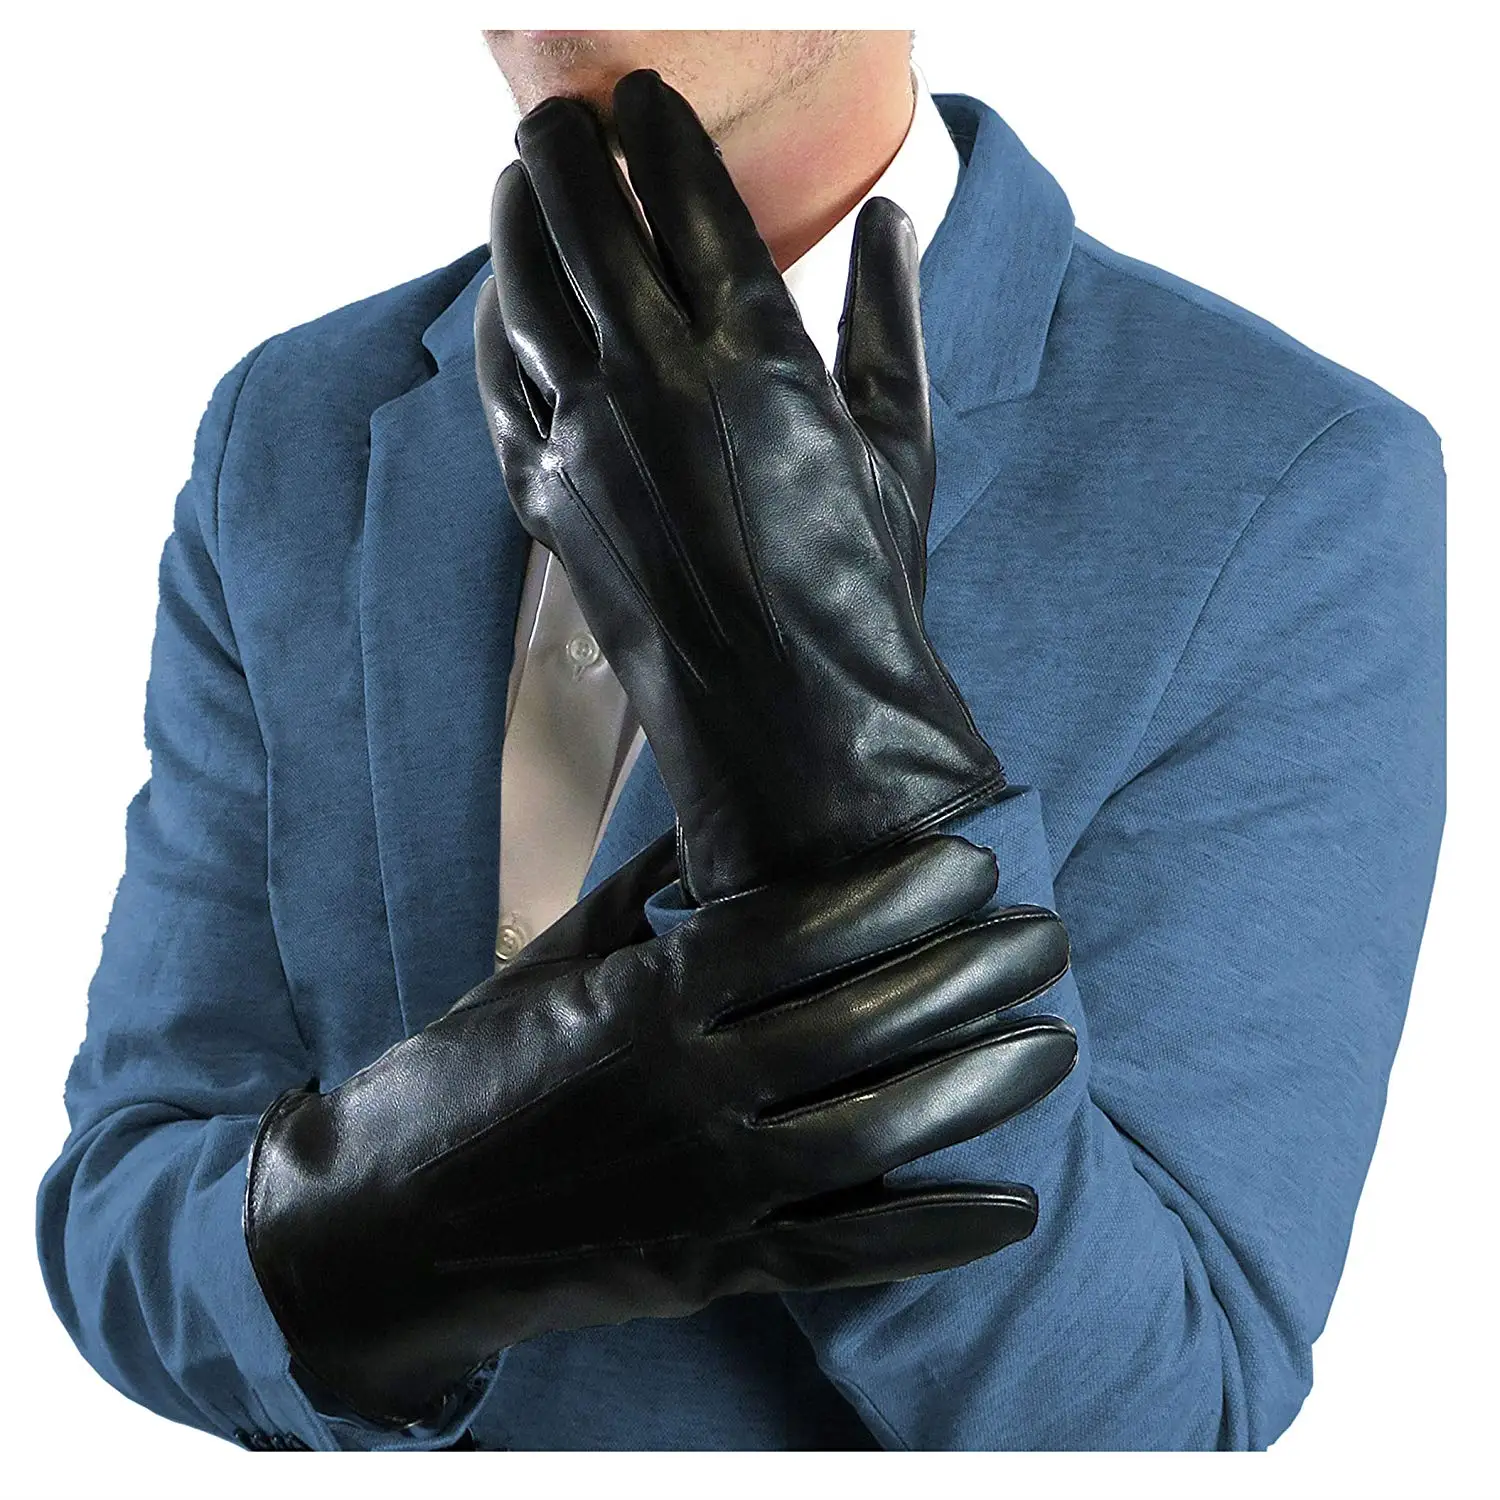 men's rabbit fur lined gloves